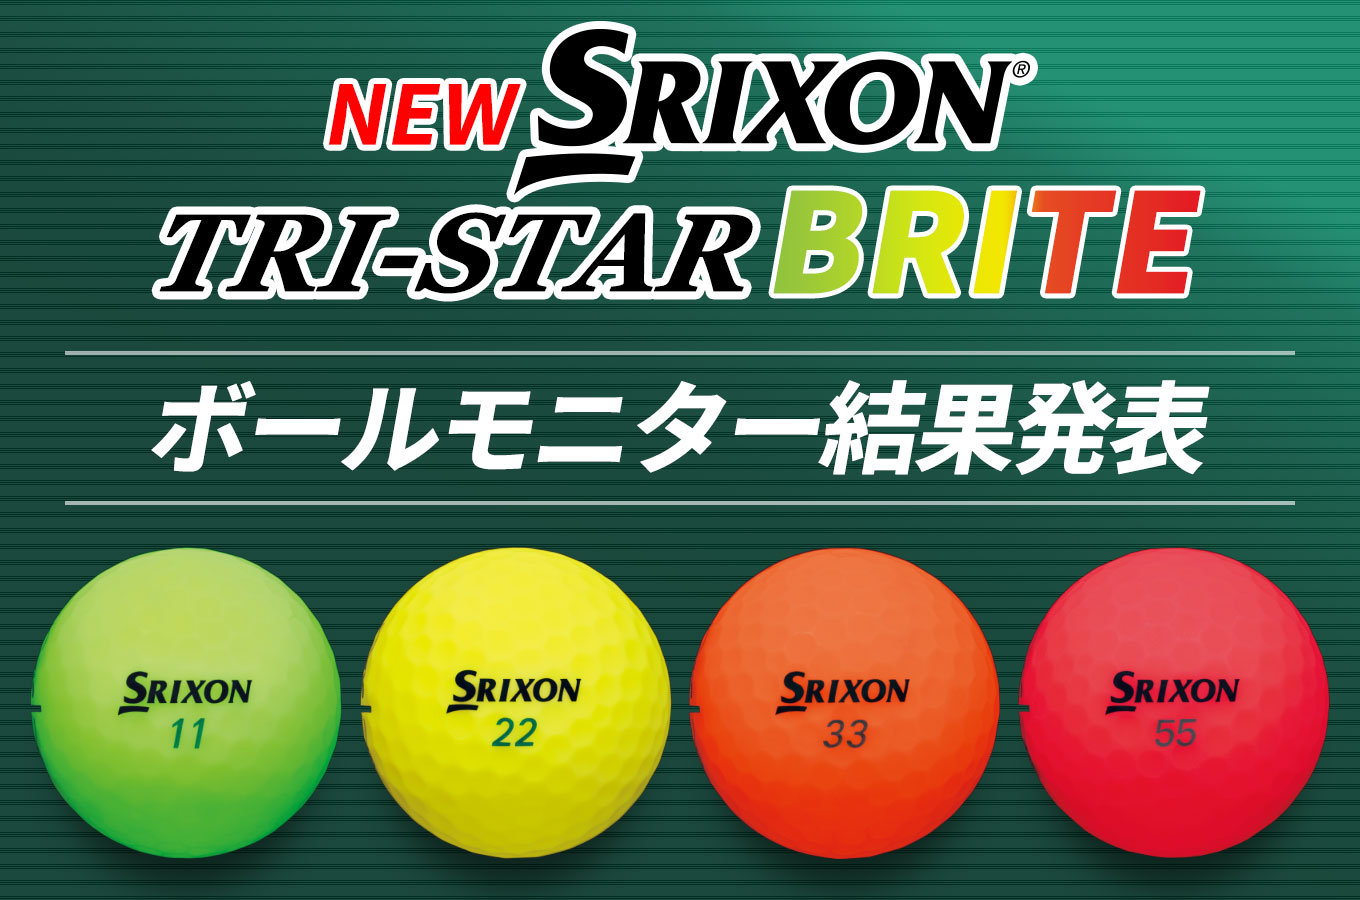 NEW スリクソン TRI-STAR BRITE ボールモニター結果発表